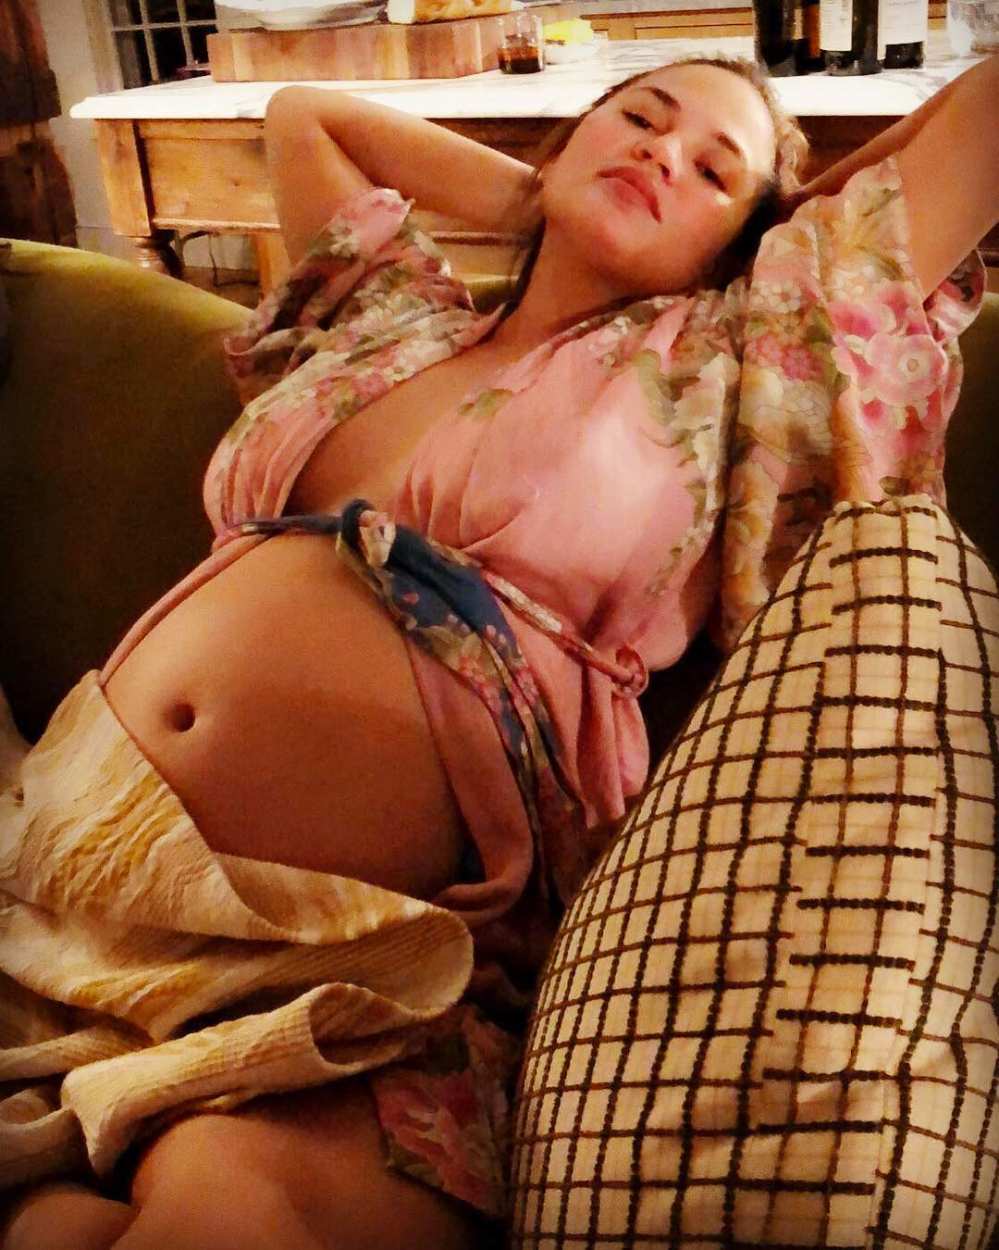 Chrissy Teigen, Pregnant, Racy Baby Bump